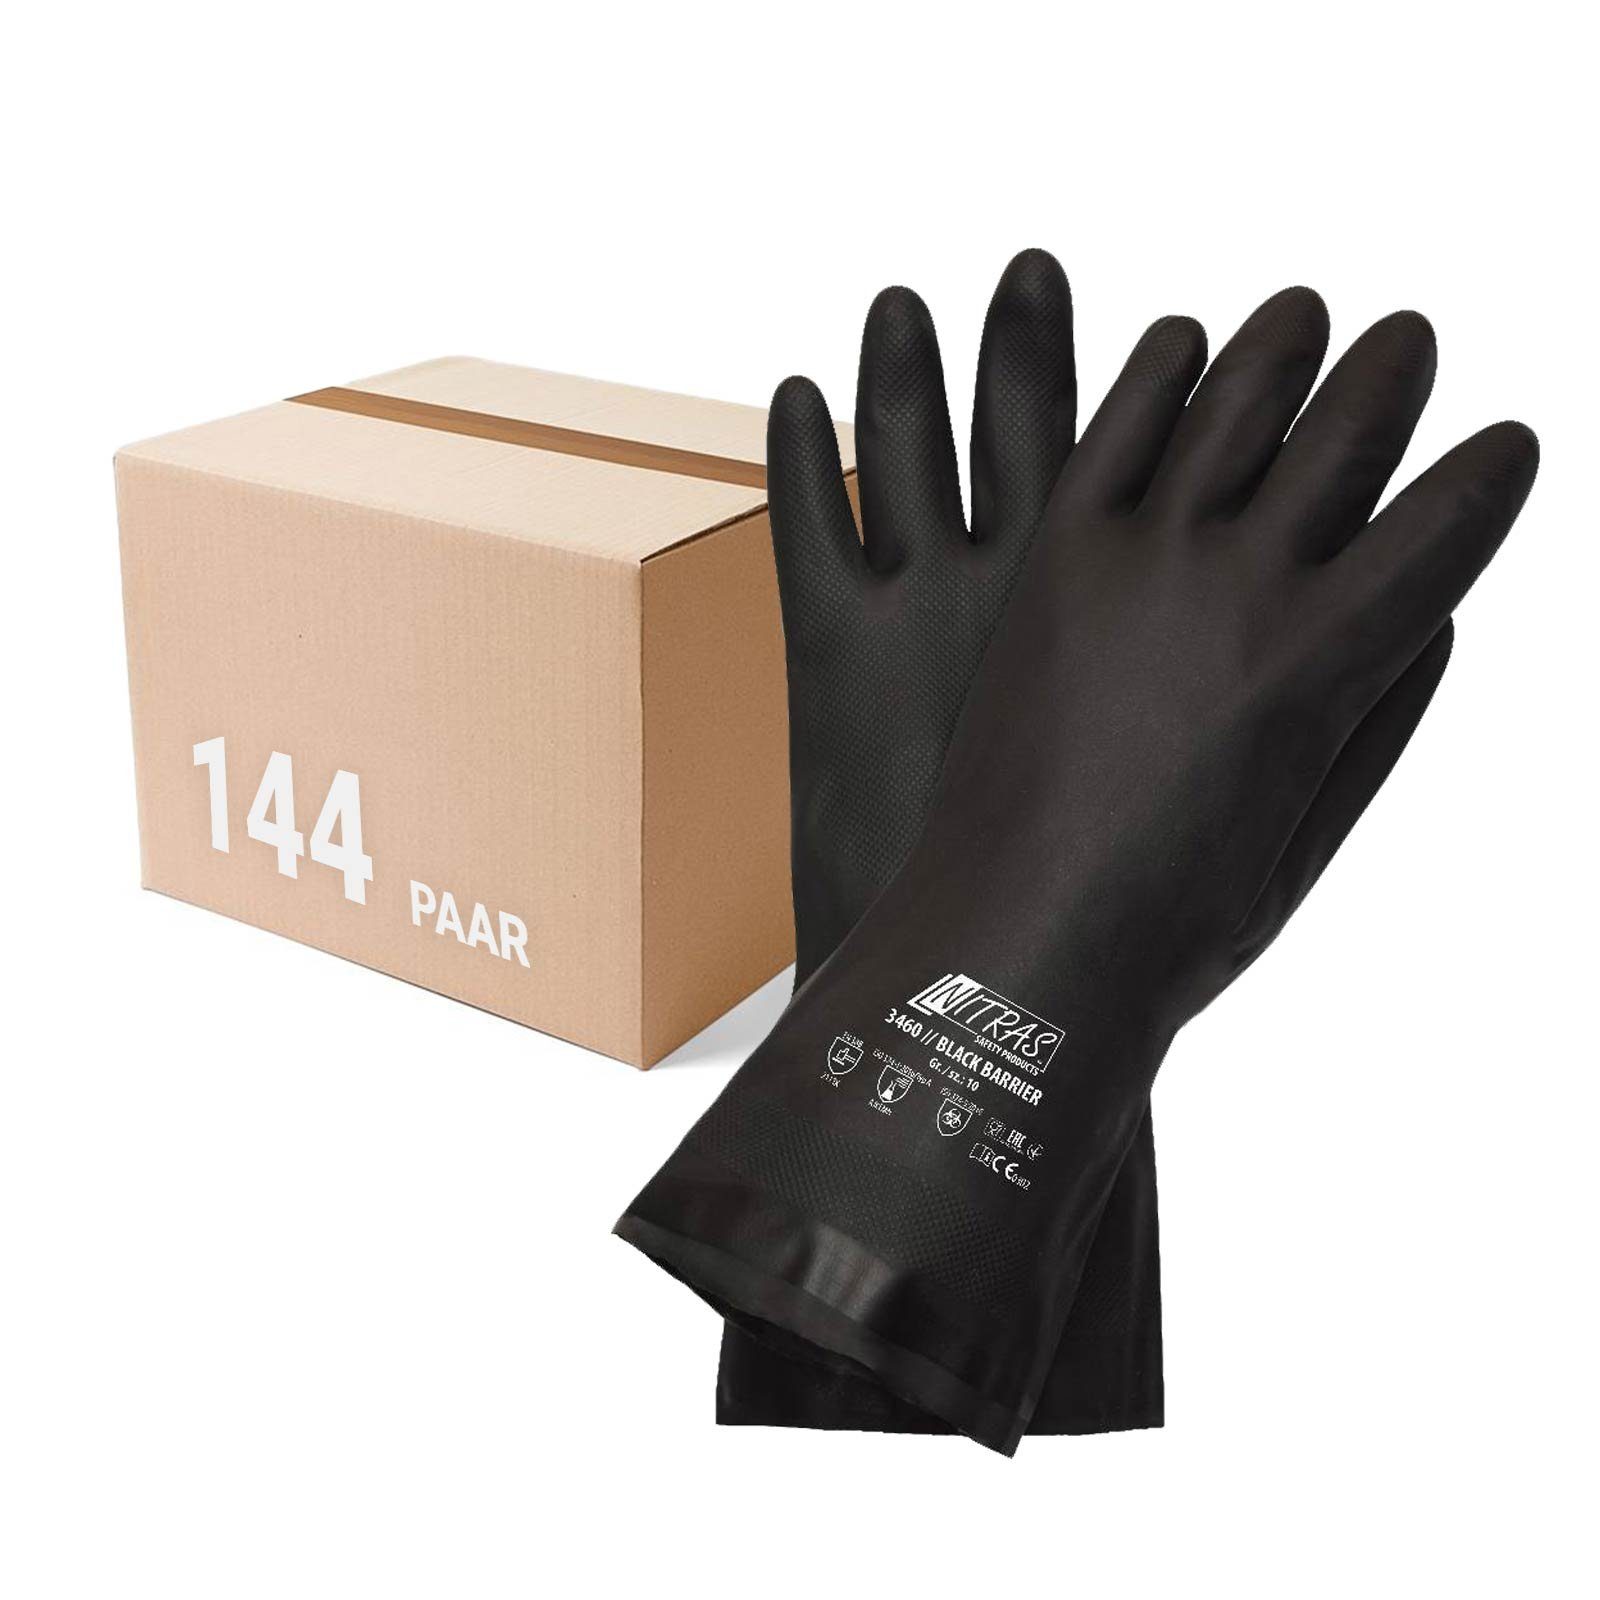 Putzhandschuh 144 Black NITRAS Paar Chloroprene-Handschuhe (Set) Barrier 3460 velourisiert Nitras